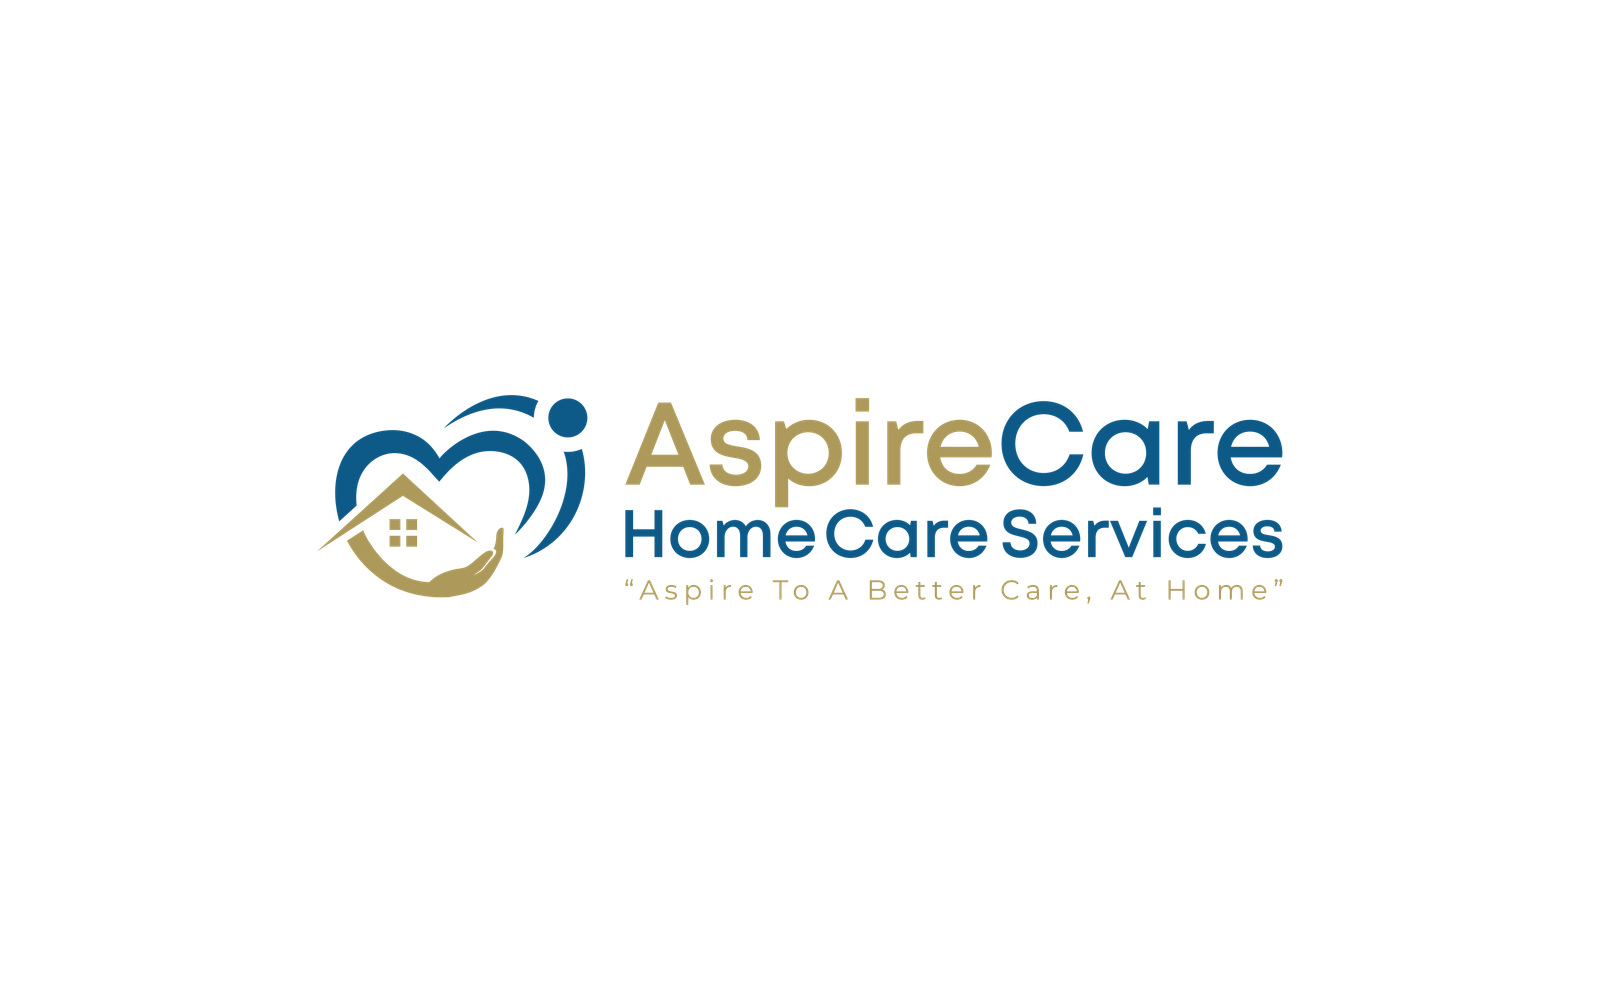 Aspire Care HomeCare Services